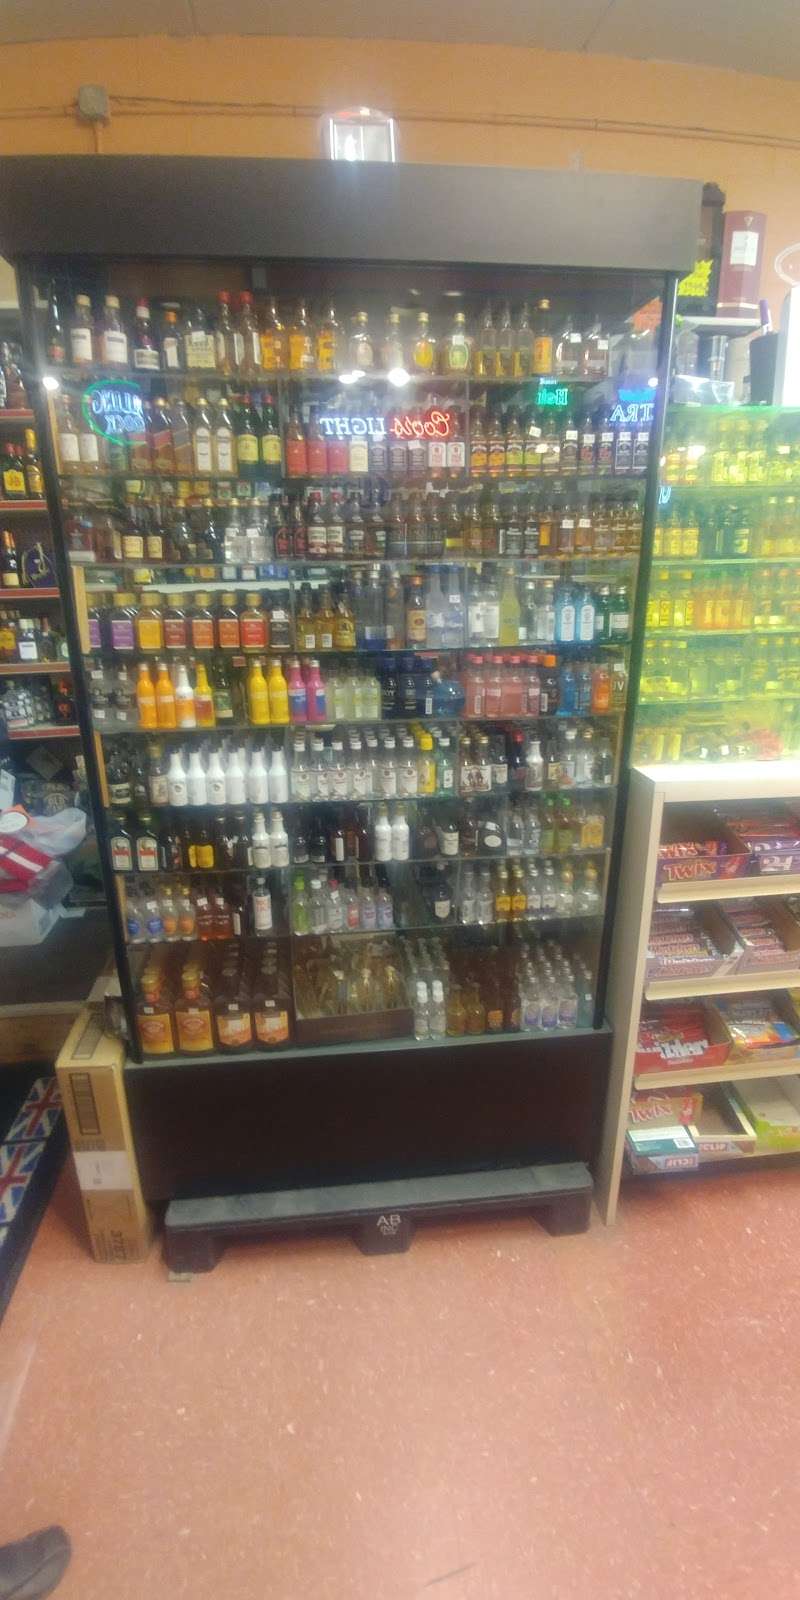 Boston Road Market Liquors | 871 Boston Rd, Groton, MA 01450 | Phone: (978) 448-2628